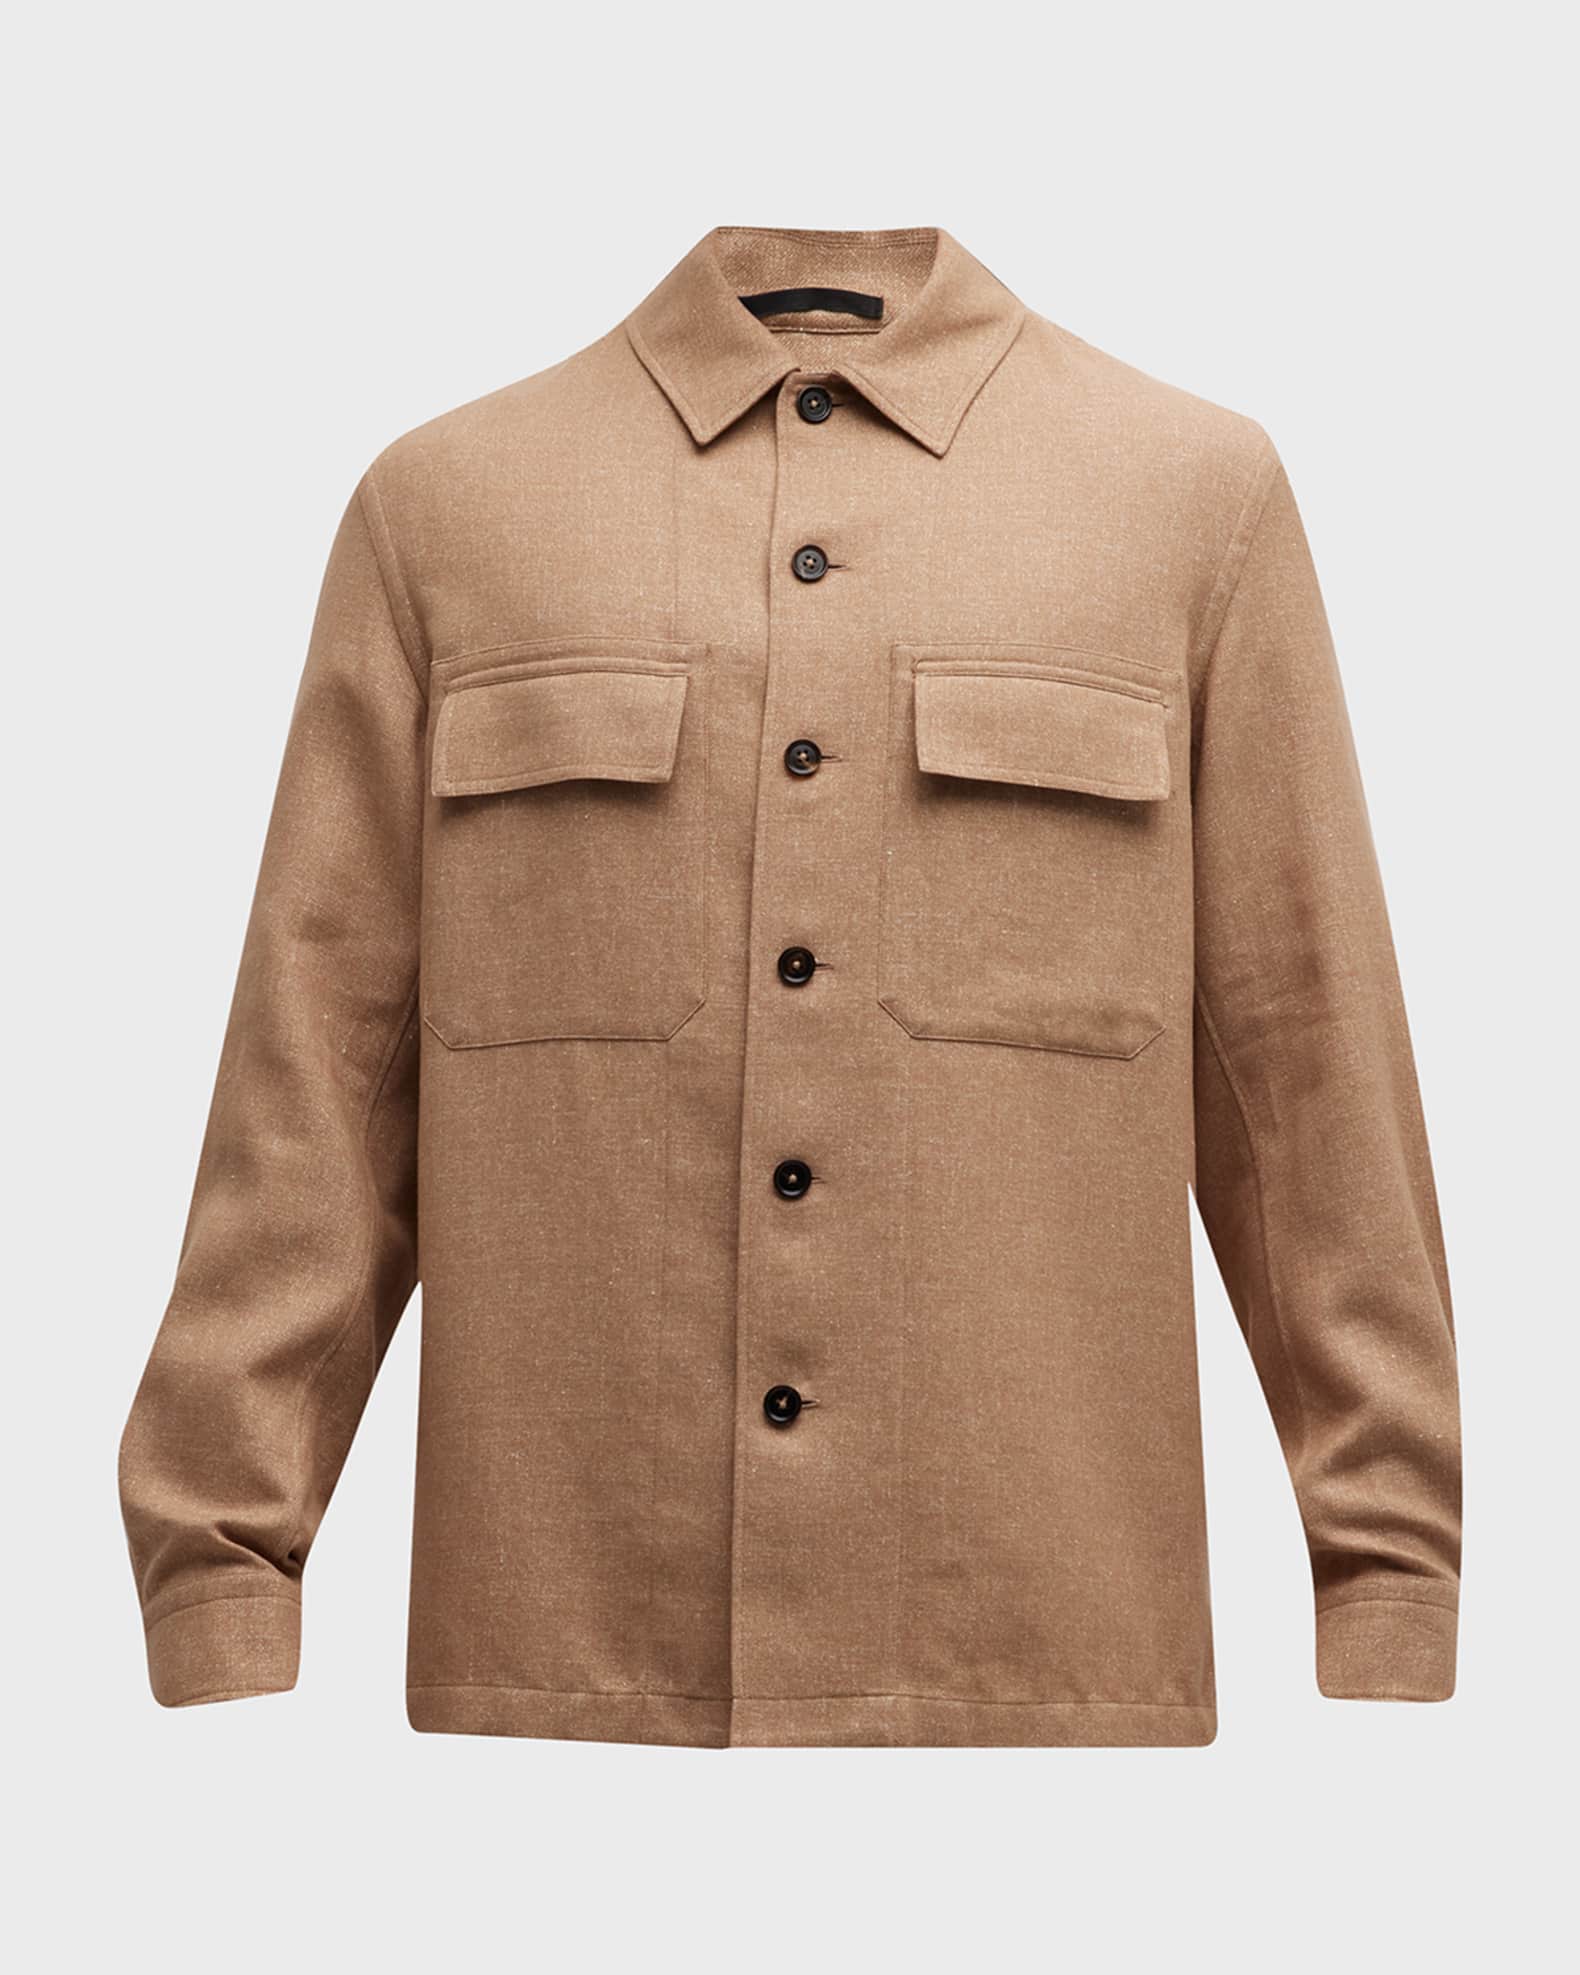 ZEGNA Men's Cashmere-Linen Overshirt | Neiman Marcus